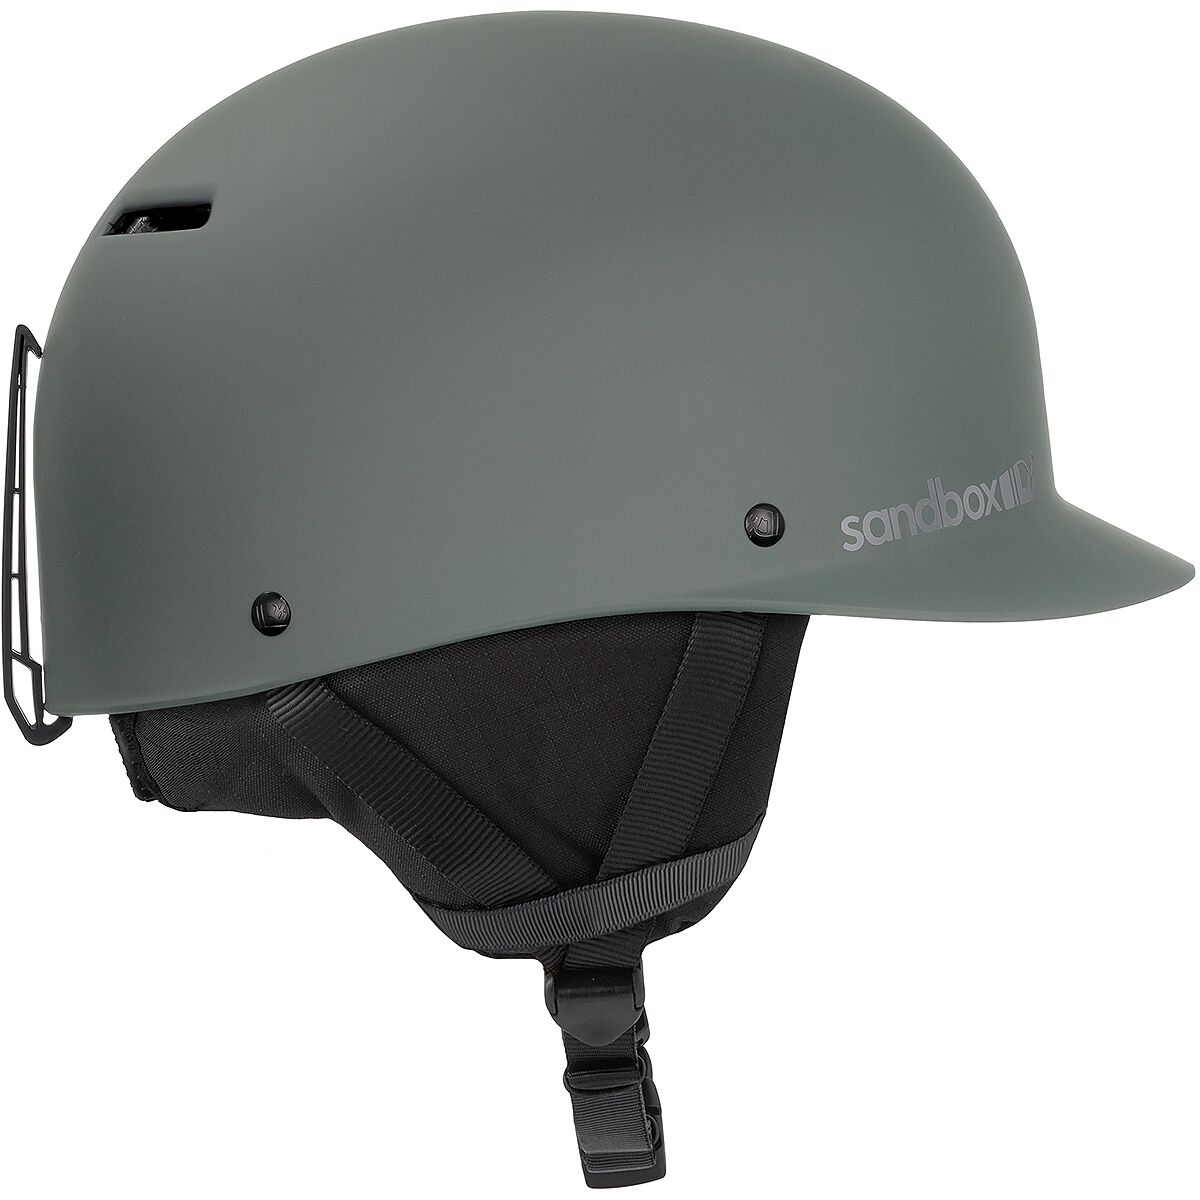 Sandbox Classic 2.0 Snow Helmet + New Fit System